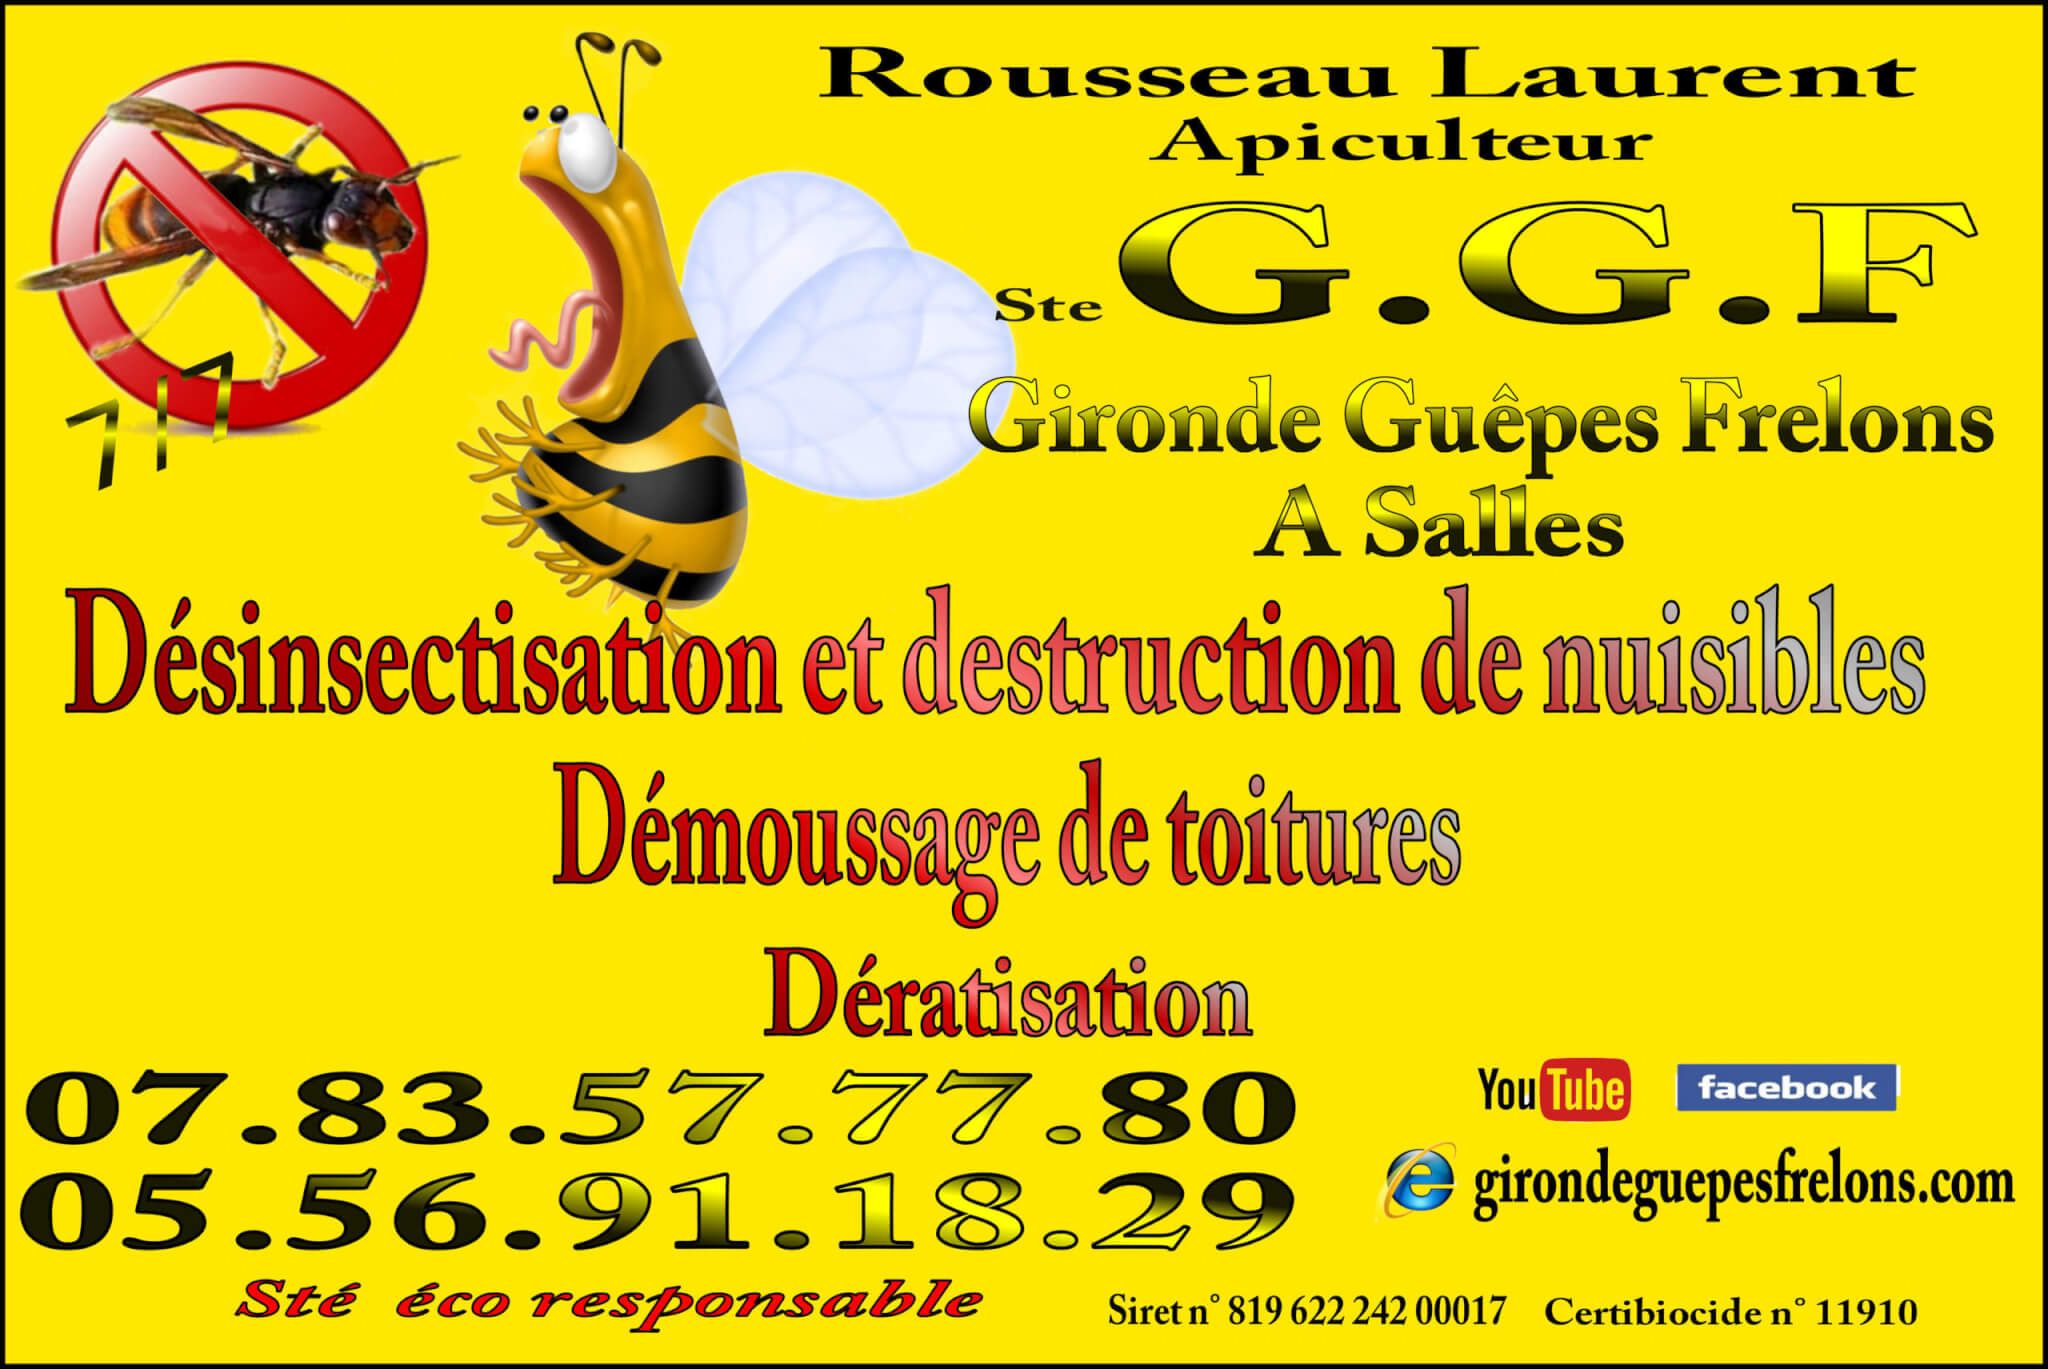  Gironde Guêpes Frelons en 2016 